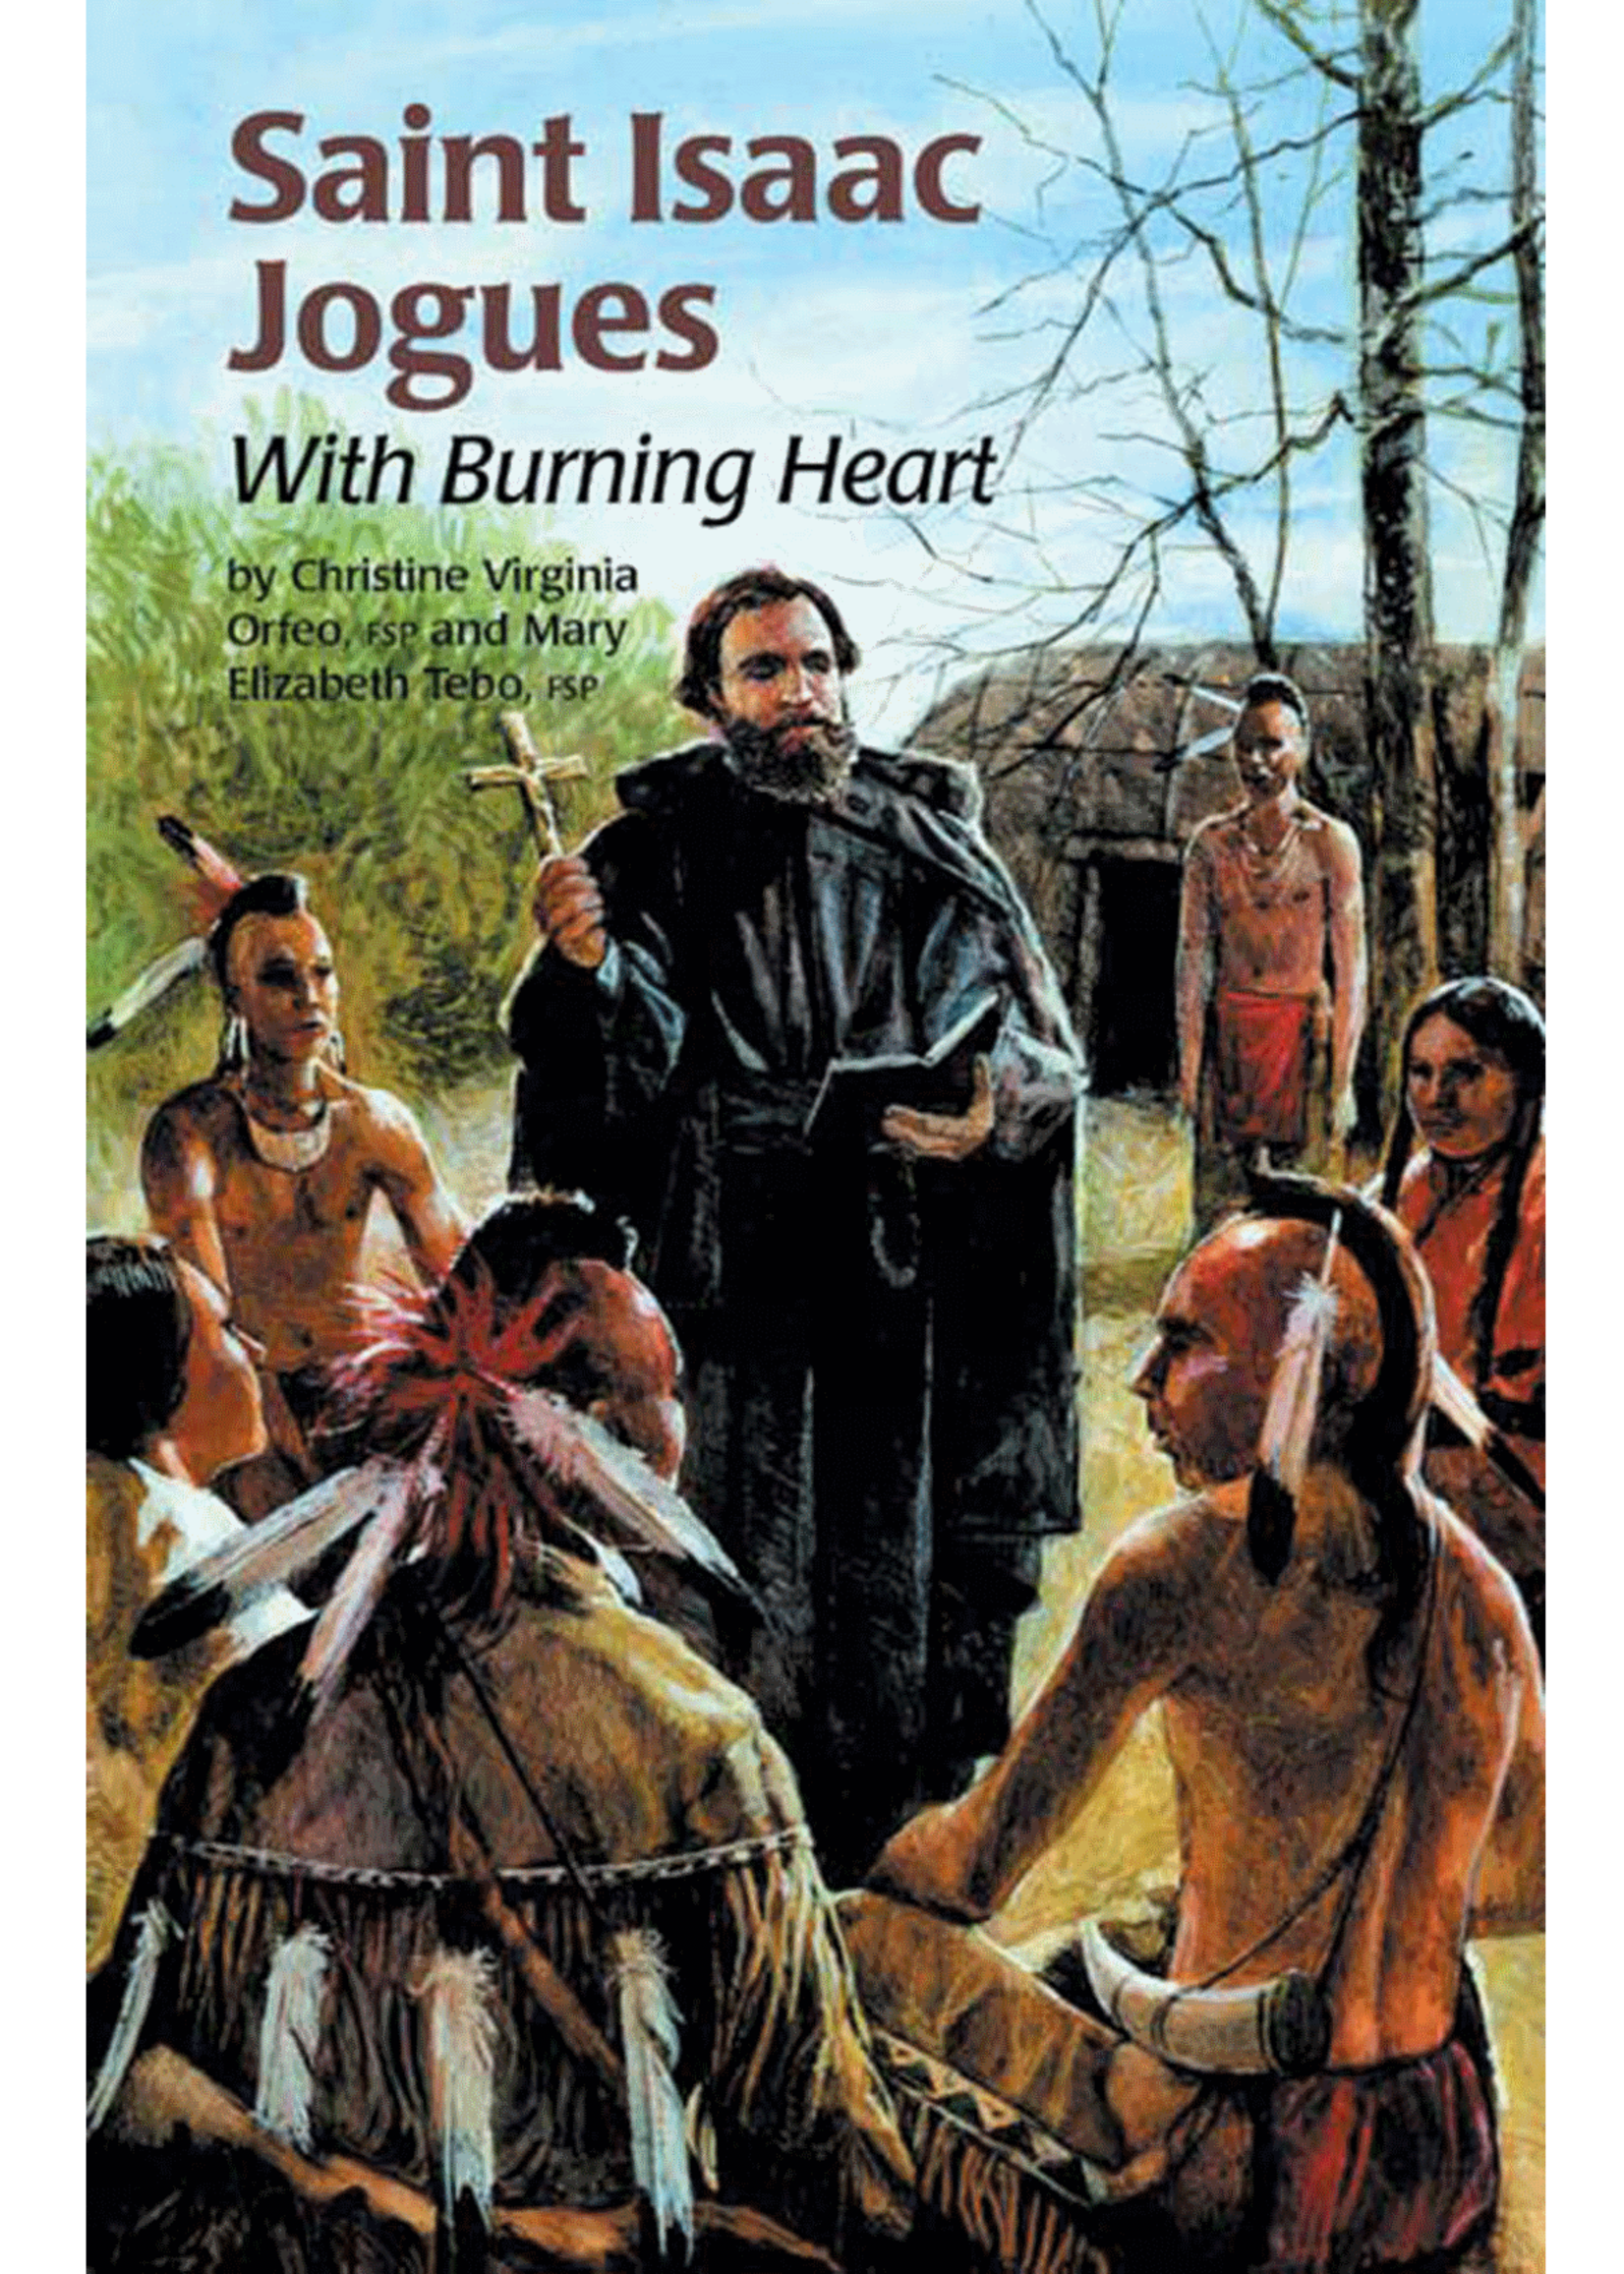 Encounter the Saints Saint Isaac Jogues - With Burning Heart